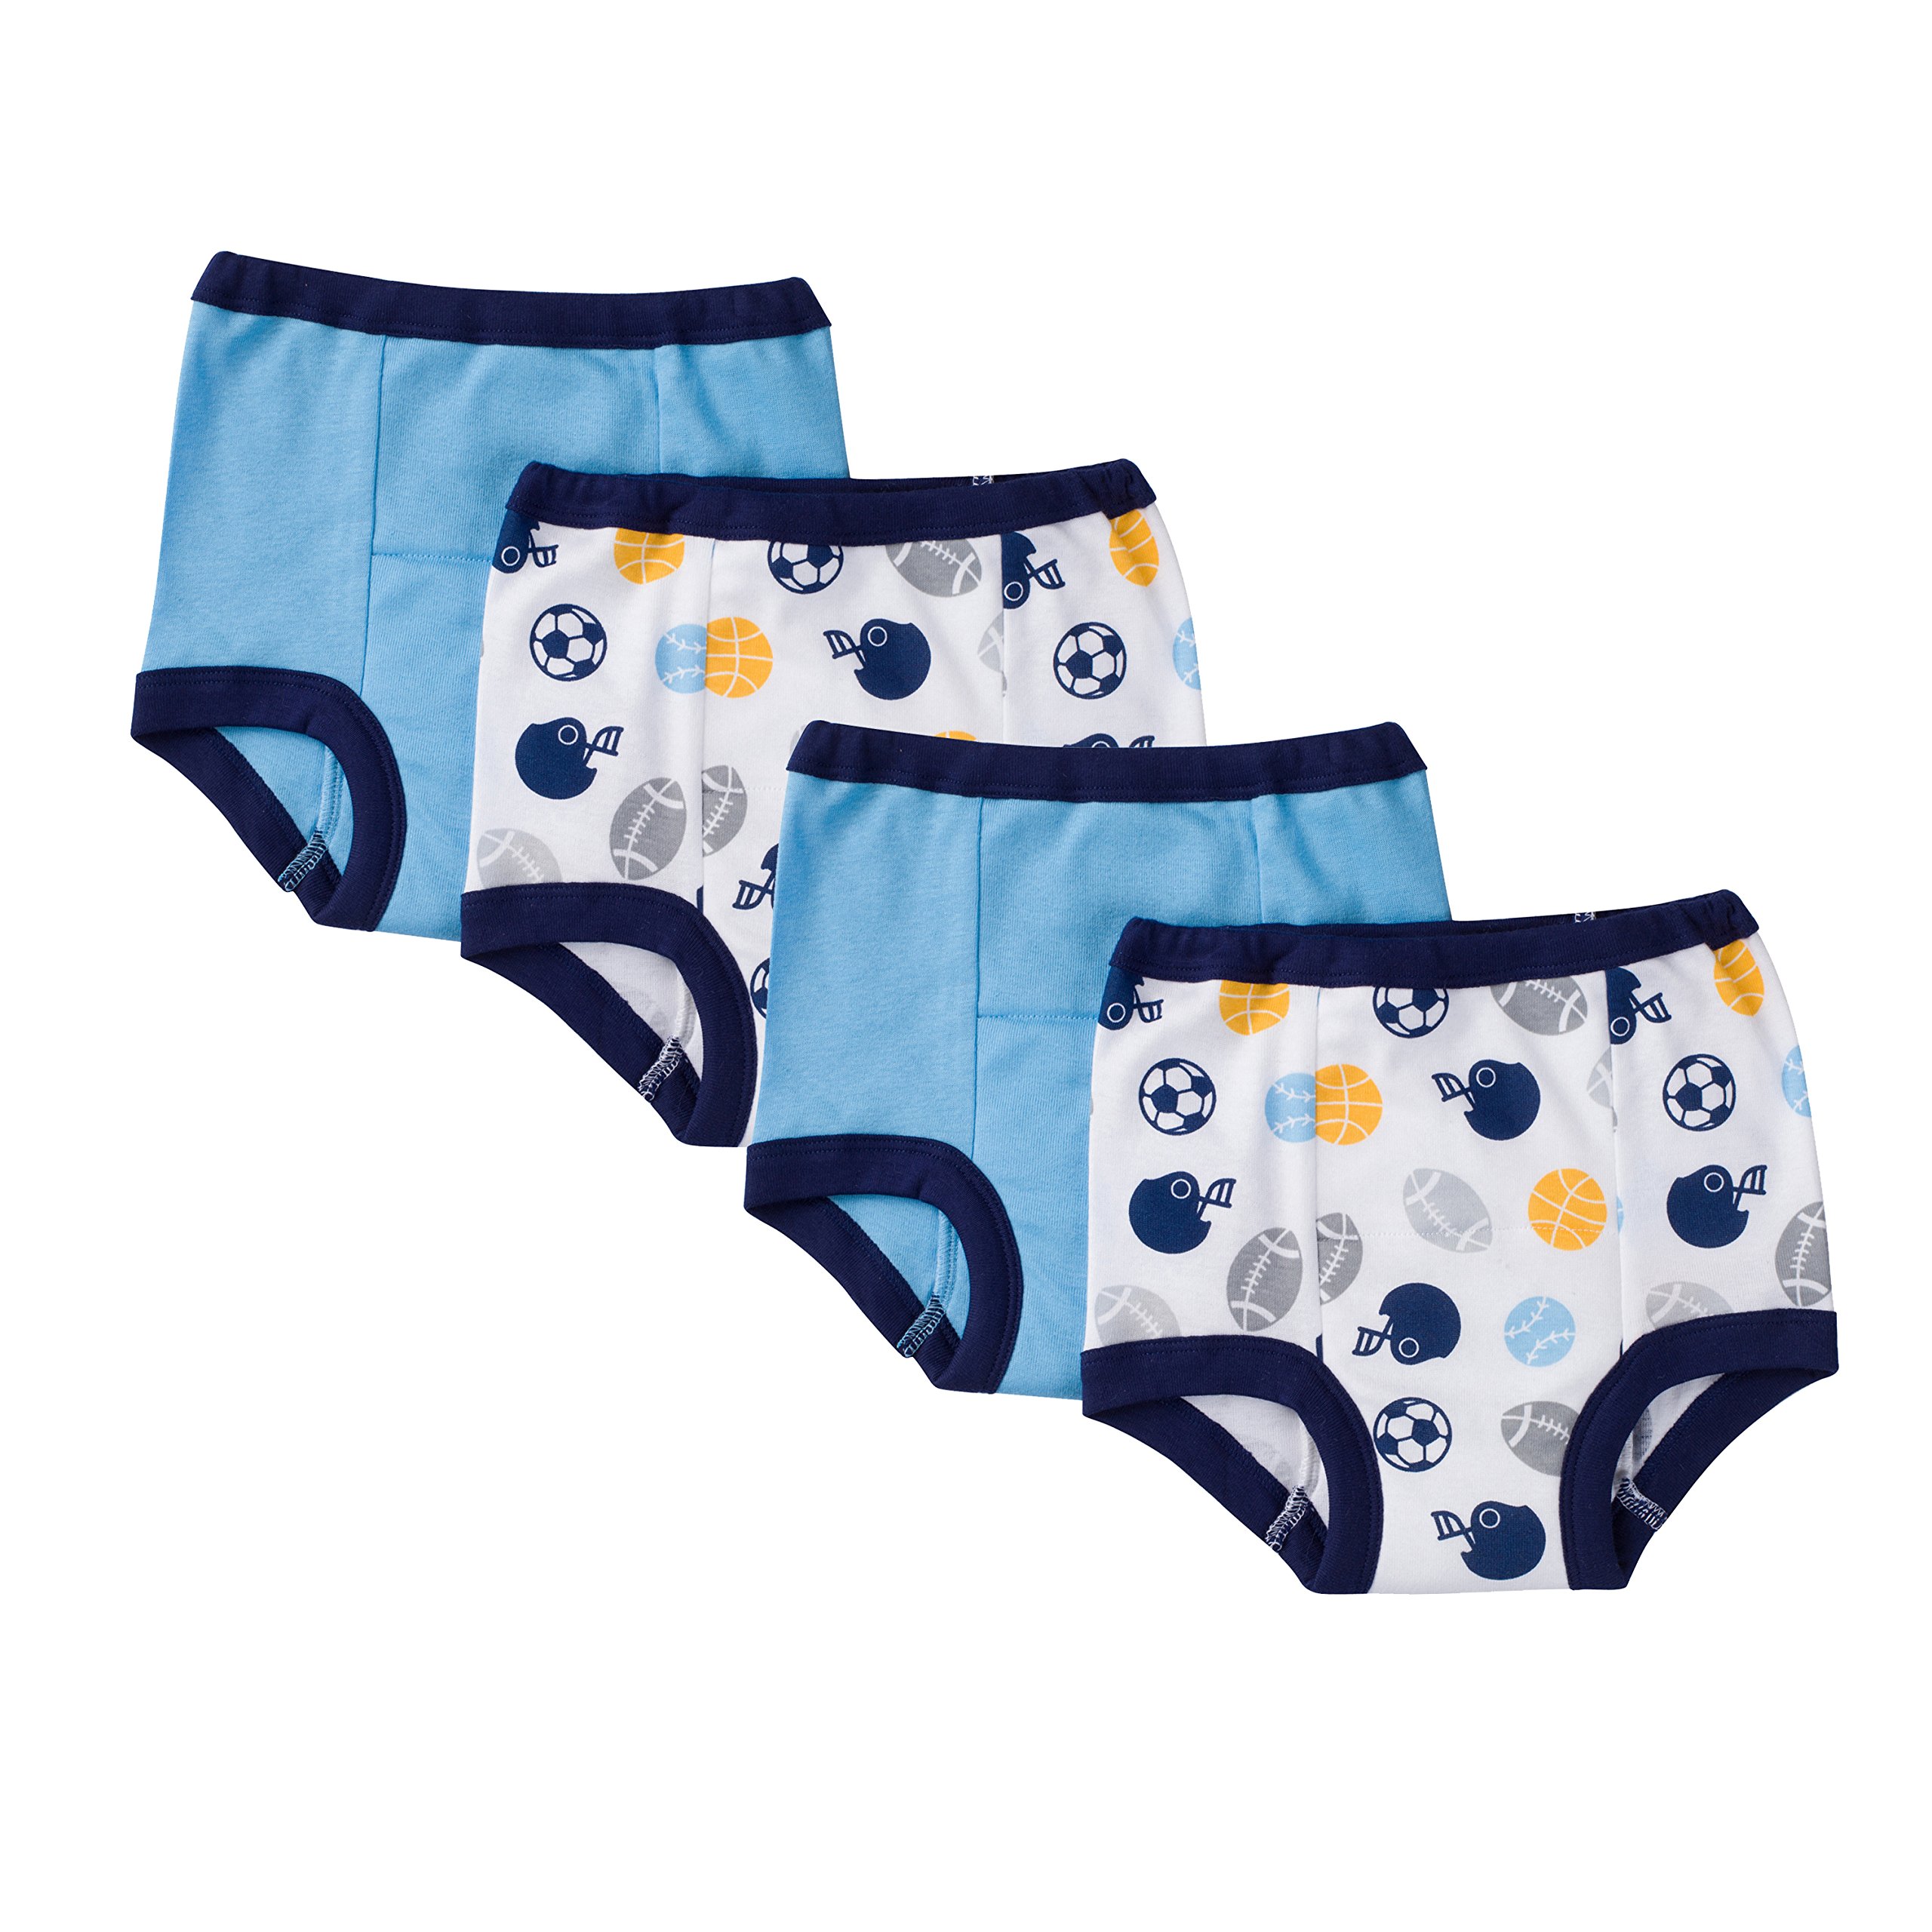 Gerber Baby Boys' Infant Toddler 4 Pack Potty Training Pants Underwear